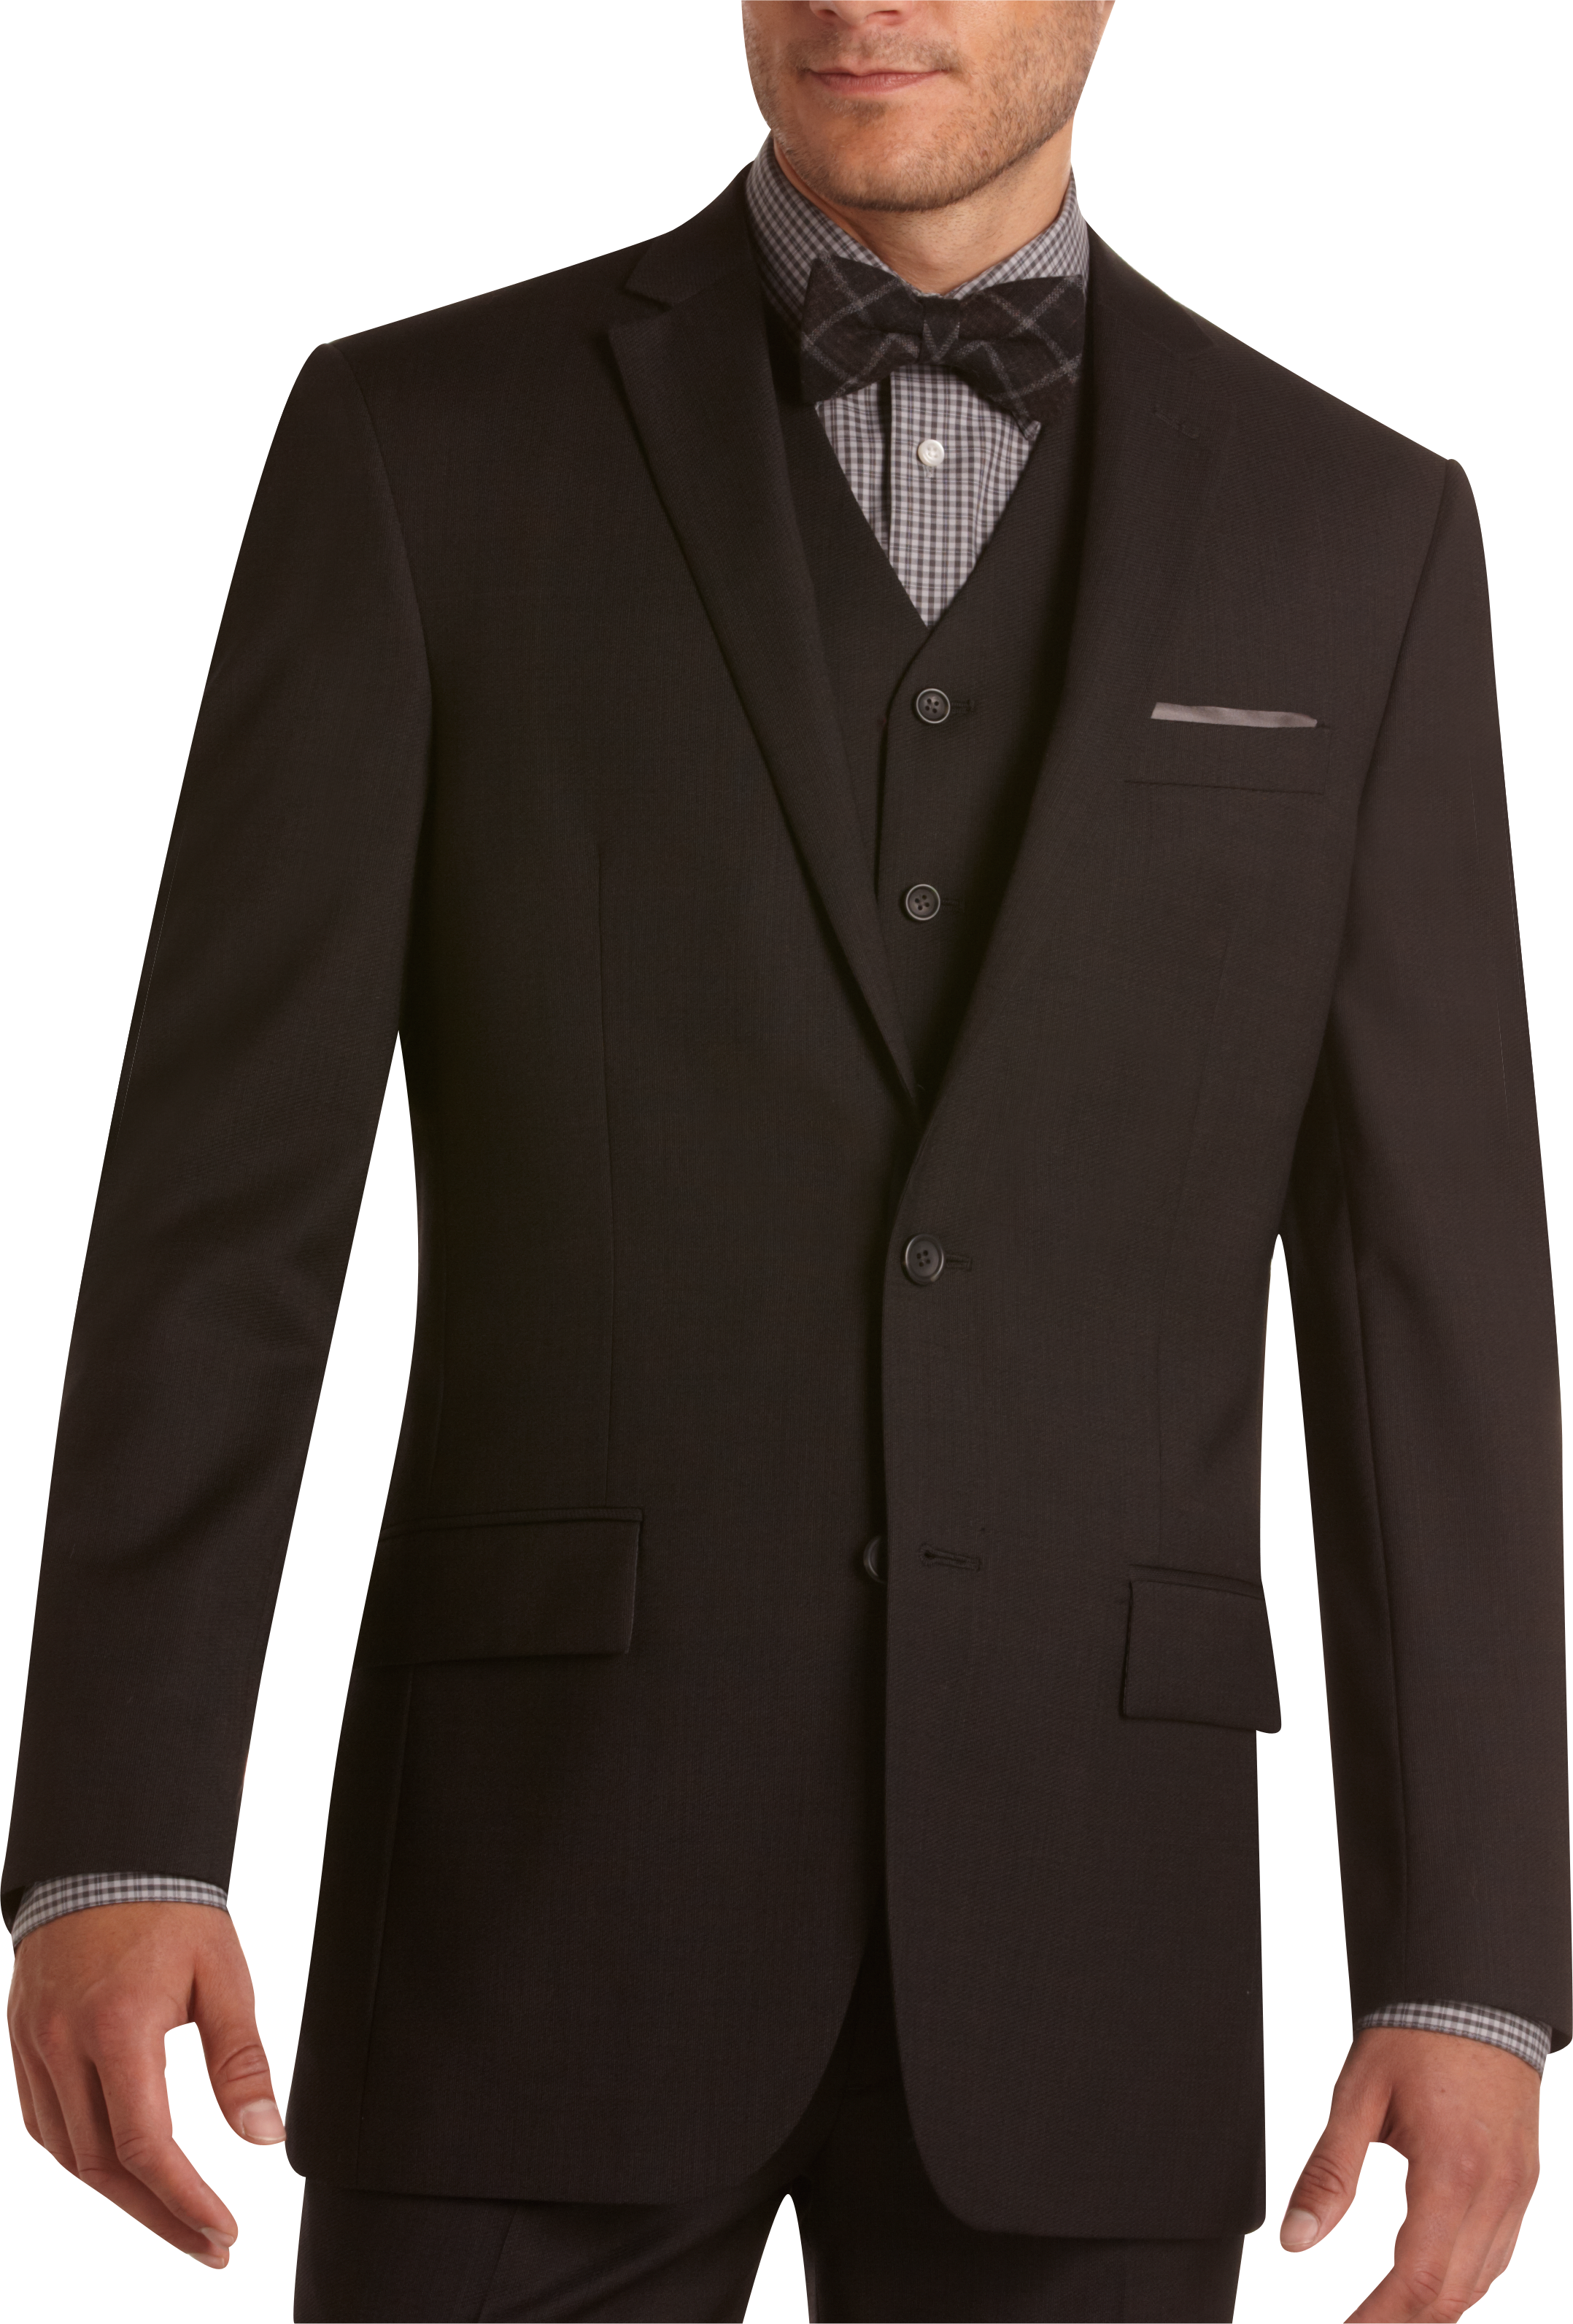 Pronto Uomo Brown Tic Vested Modern Fit Suit - Men's Sale | Men's Wearhouse